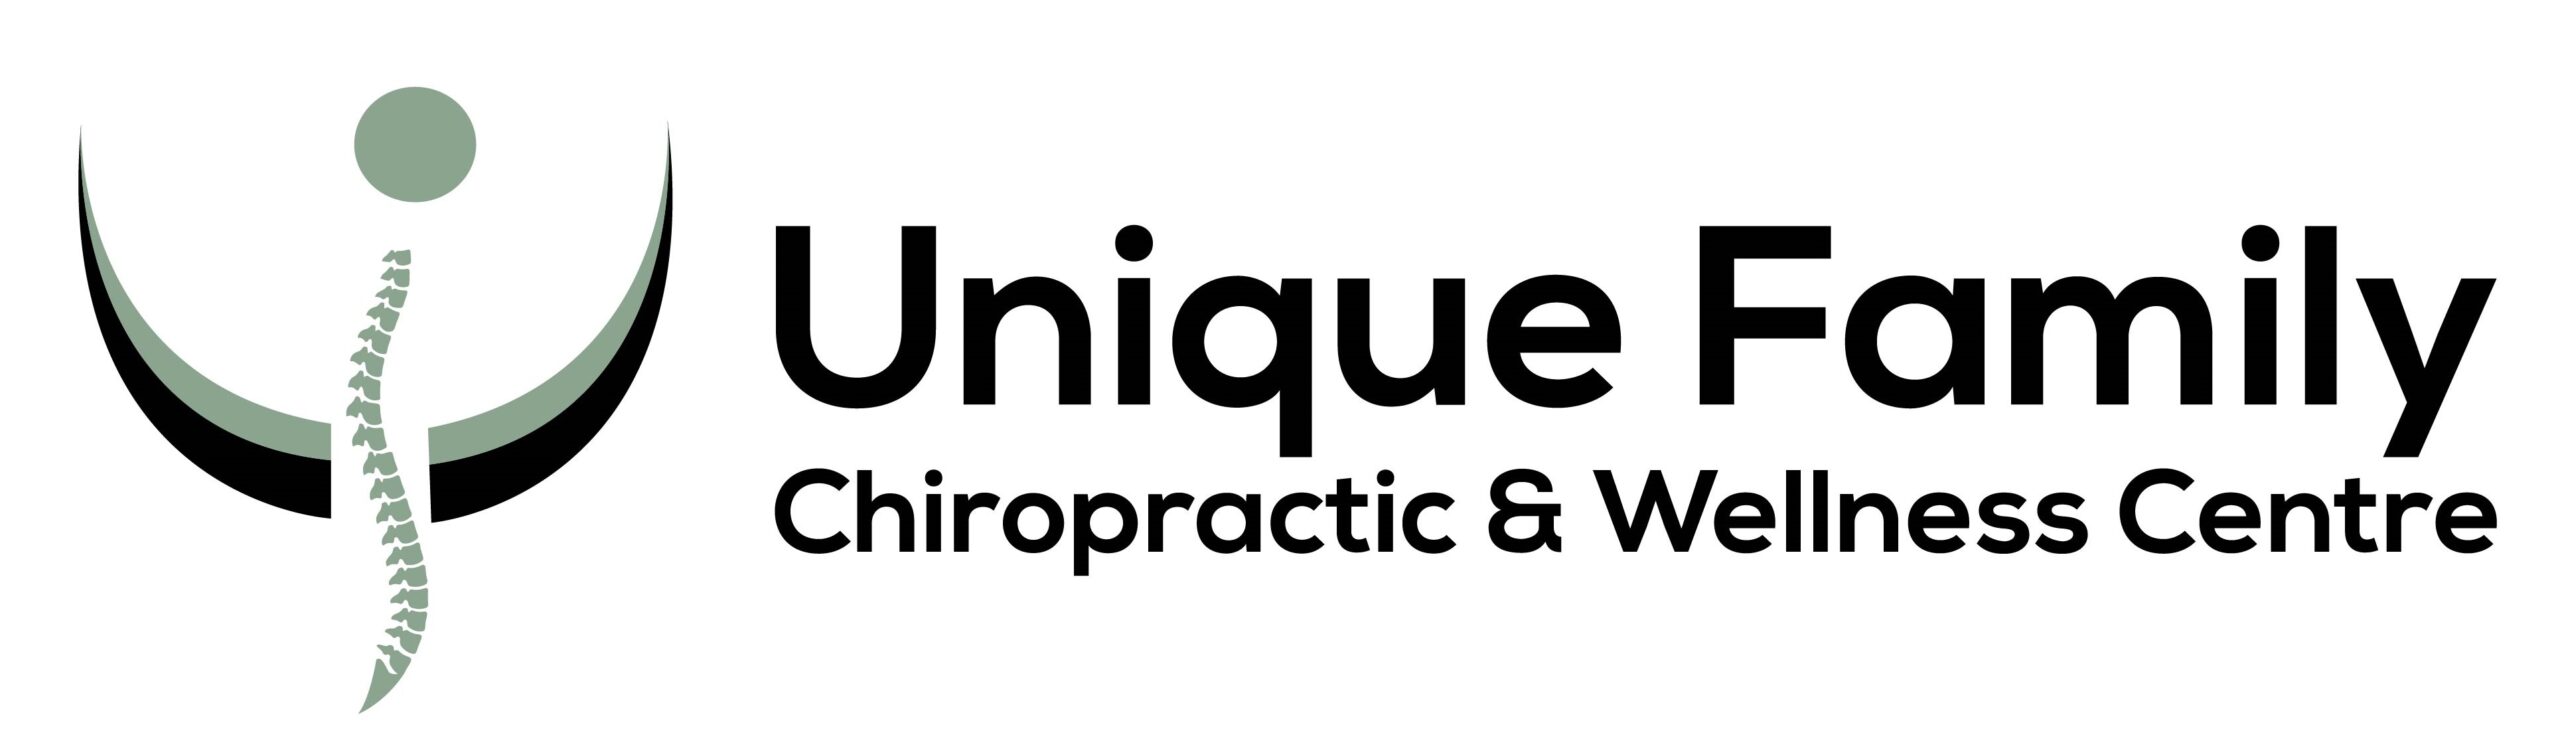 Unique Family Chiropractic & Wellness Centre